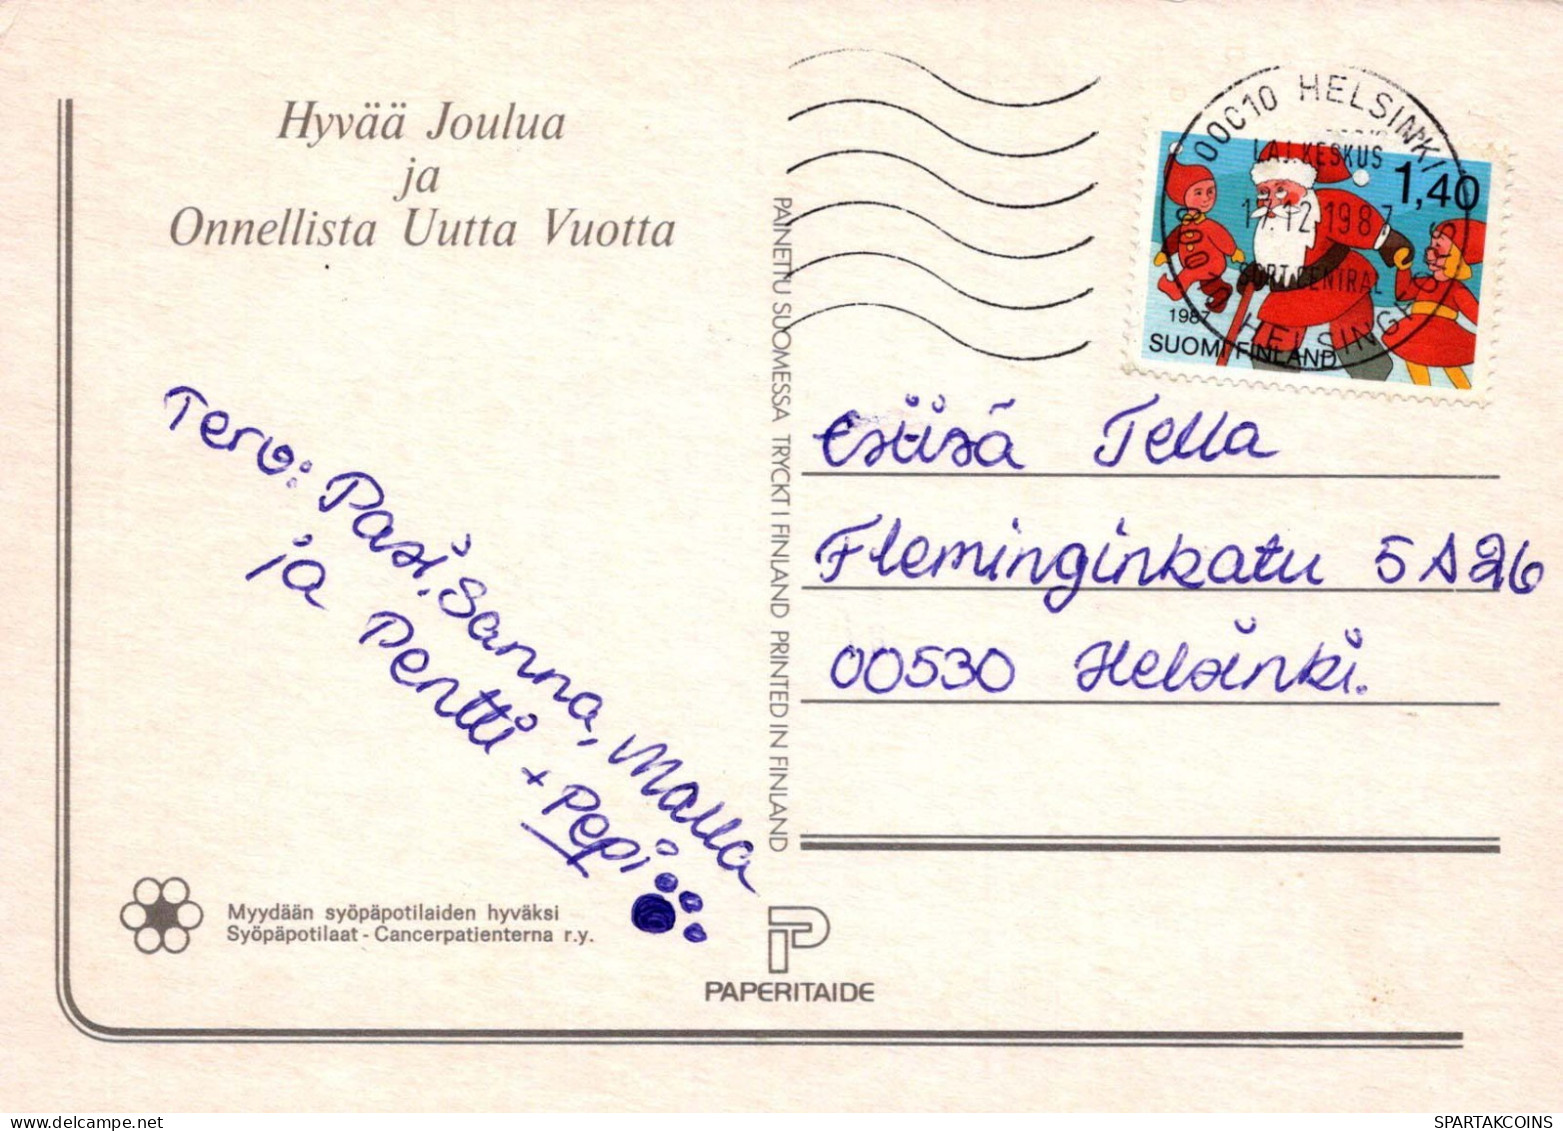 Buon Anno Natale BAMBINO Vintage Cartolina CPSM #PAZ880.IT - New Year